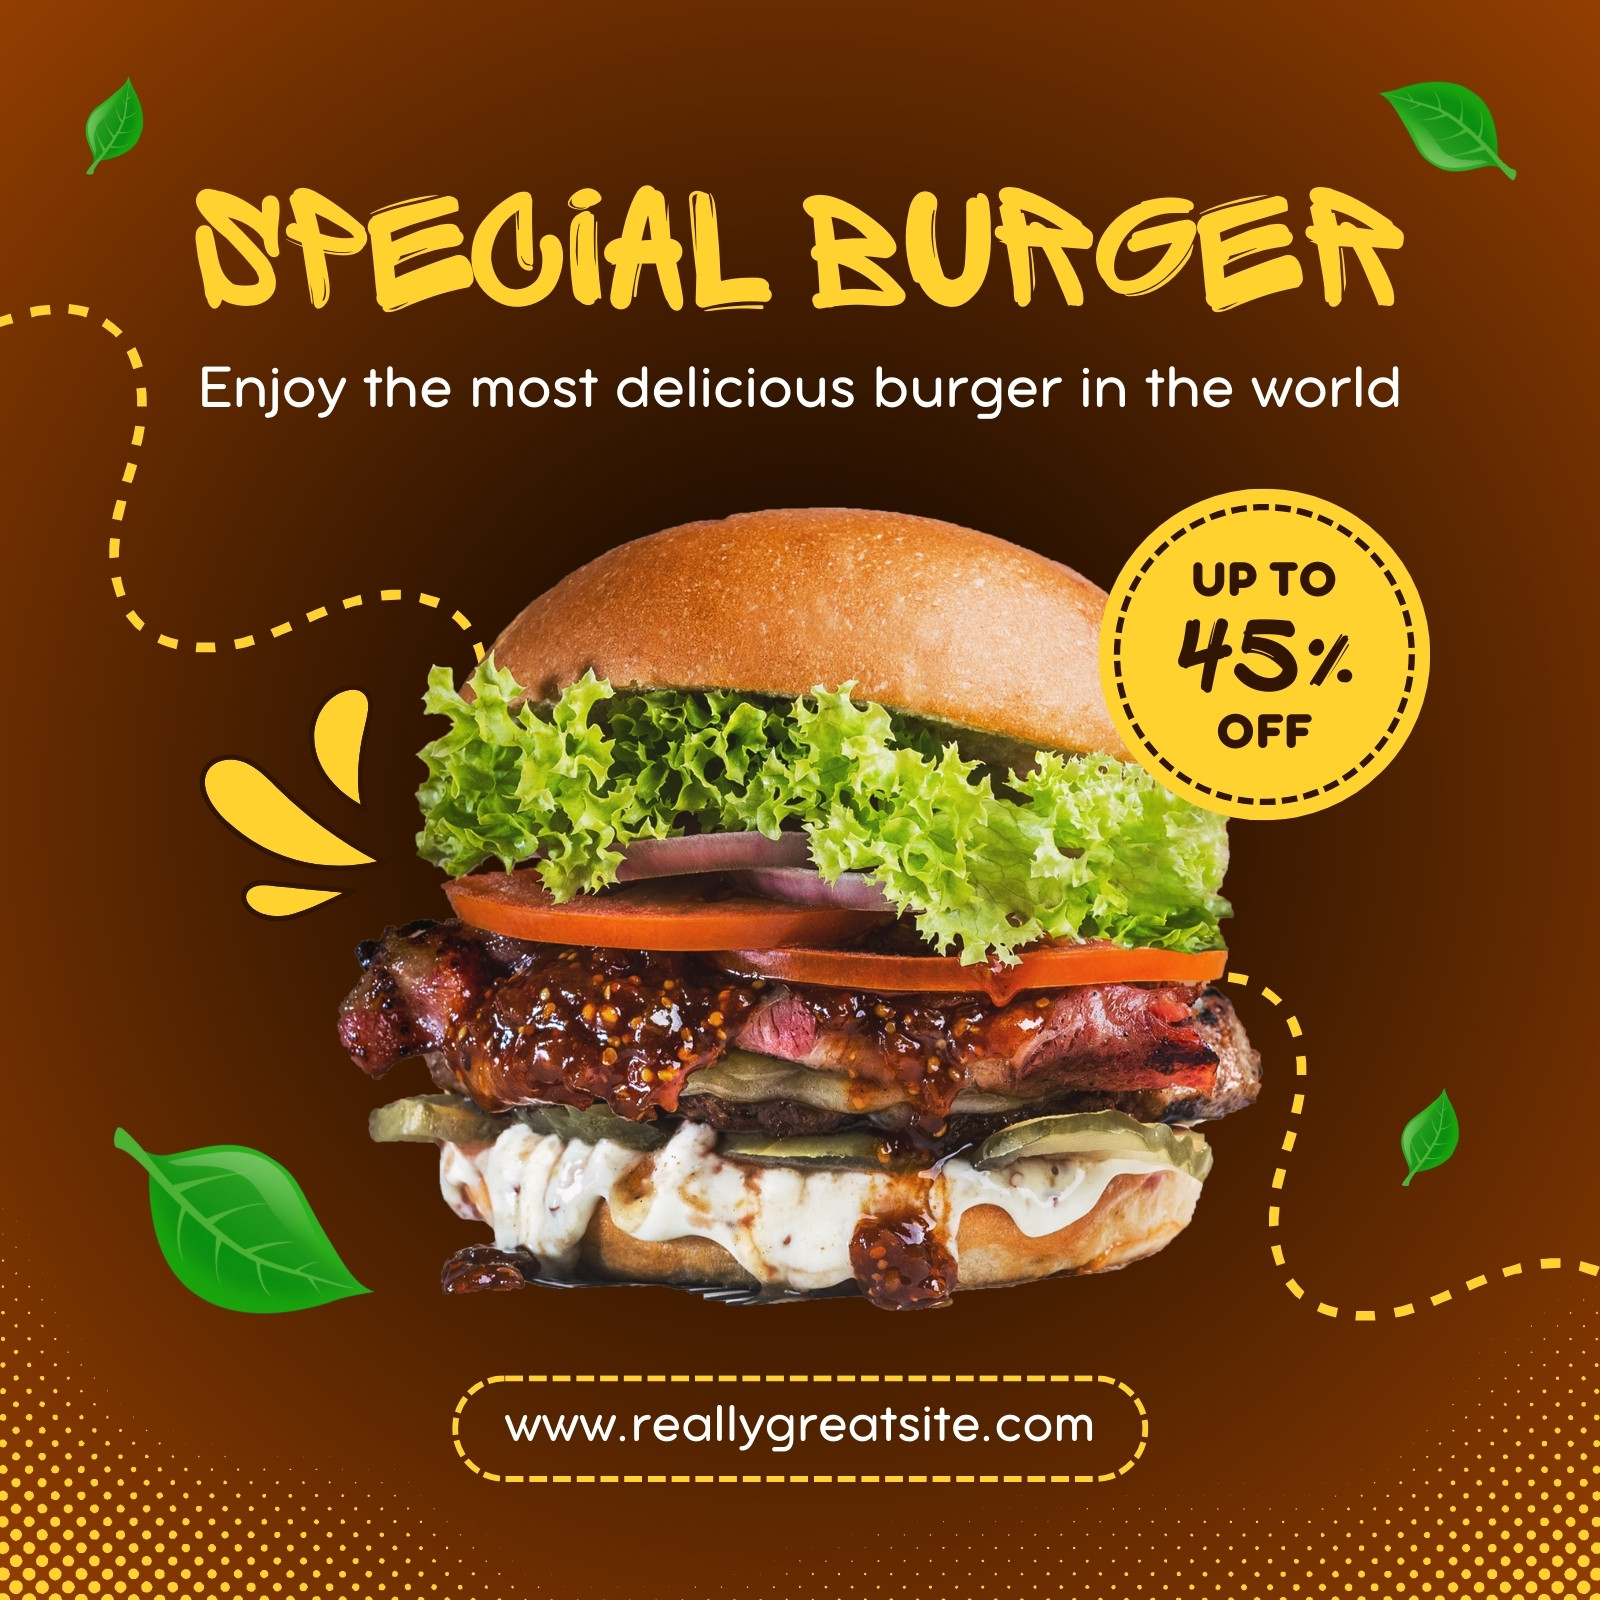 Free and customizable burger templates